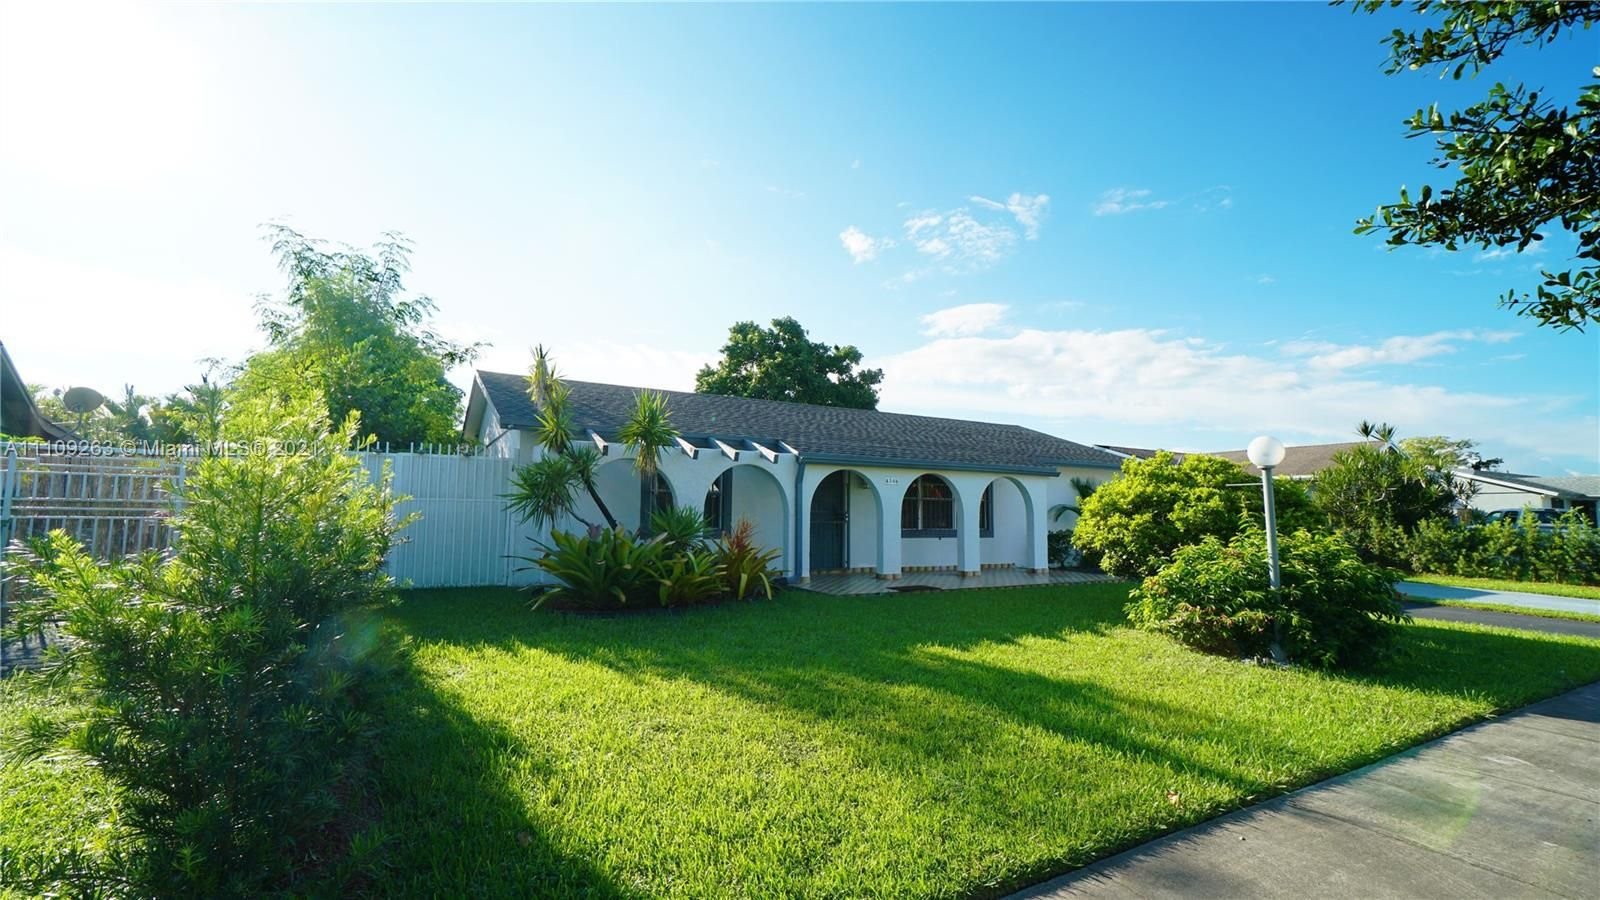 Real estate property located at 4346 134th Pl, Miami-Dade County, Miami, FL